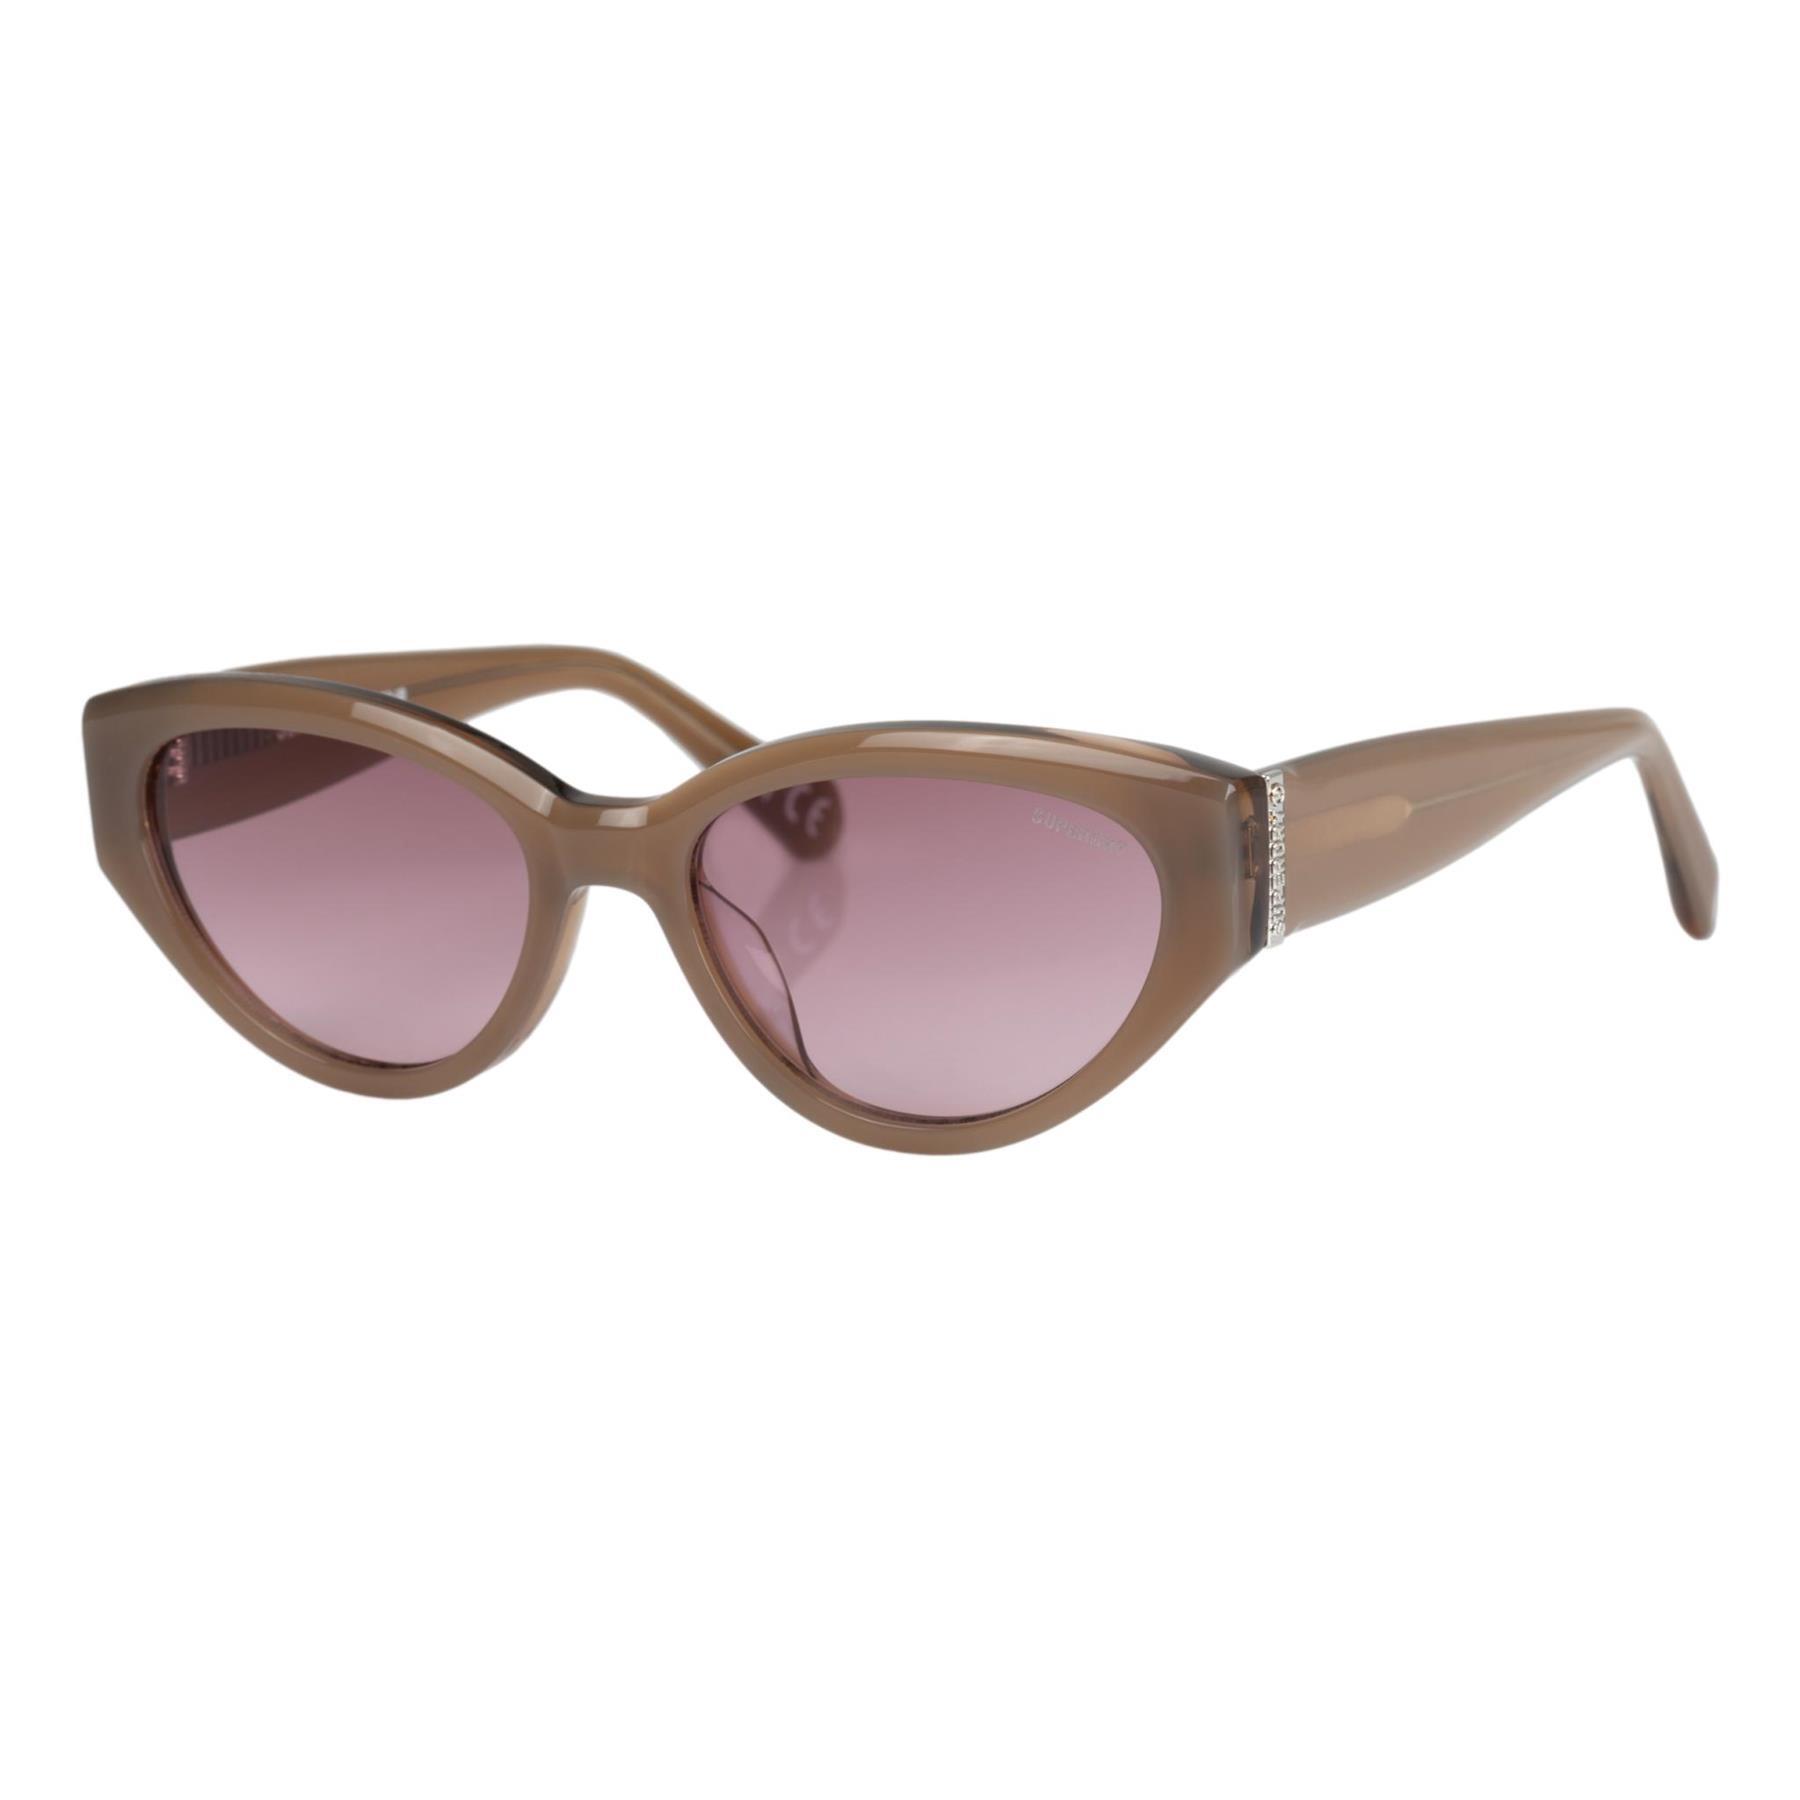 Superdry 5013 Sunglasses - Pink 3/3